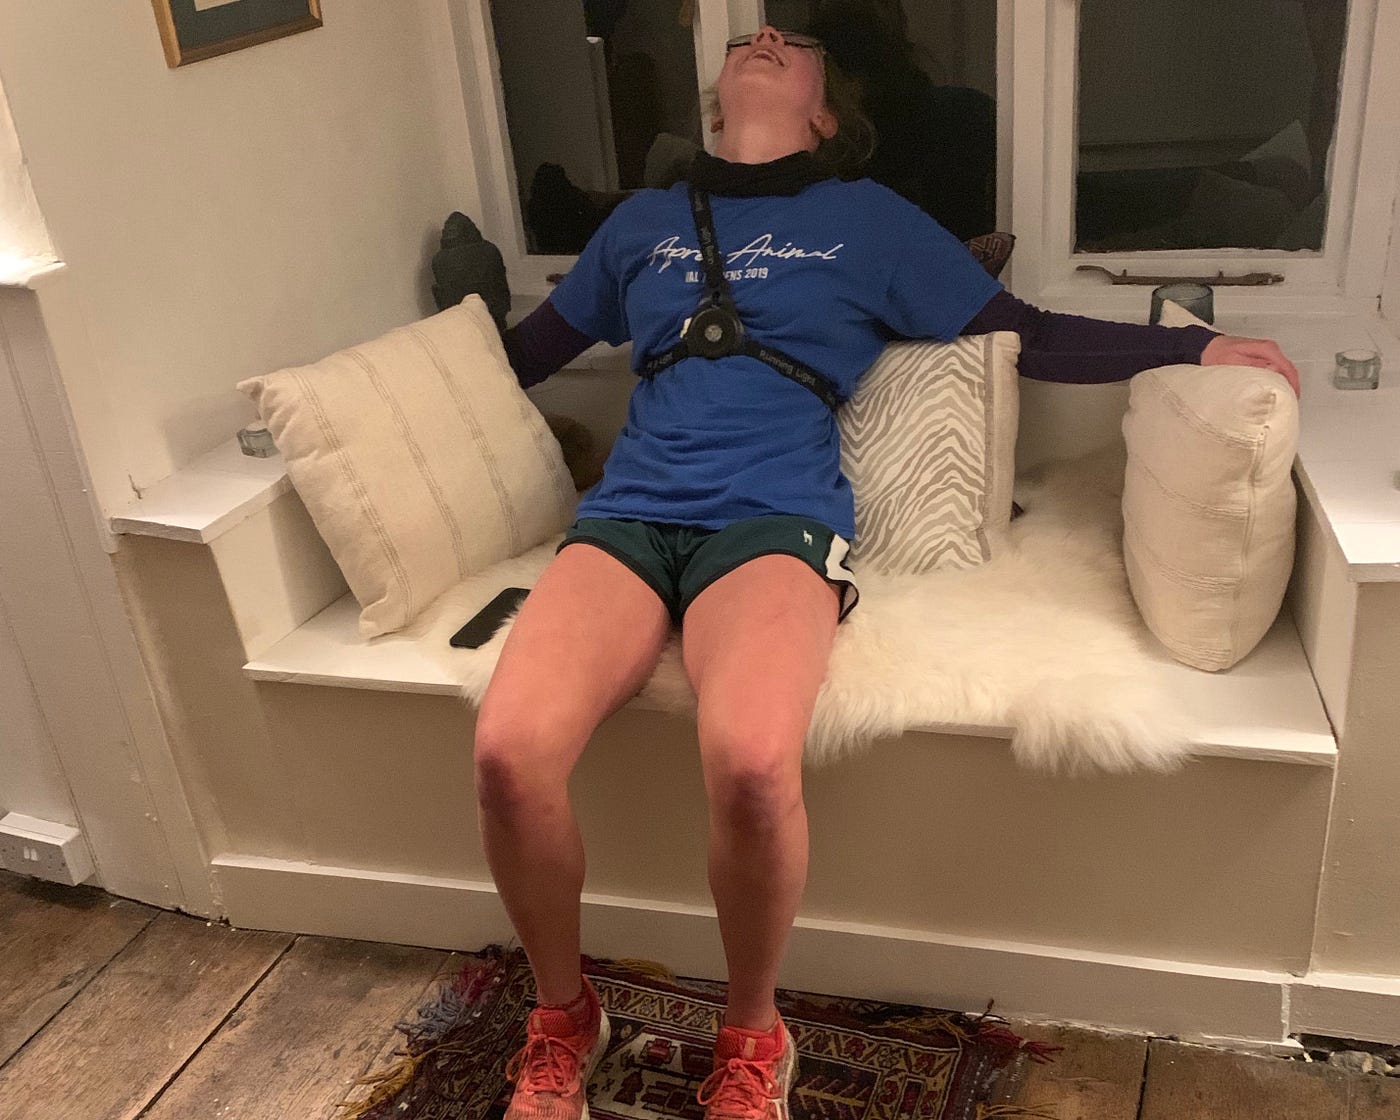 5x4x24 Yeti Challenge. My first “Ultra marathon” | by Abby Wynne | Medium